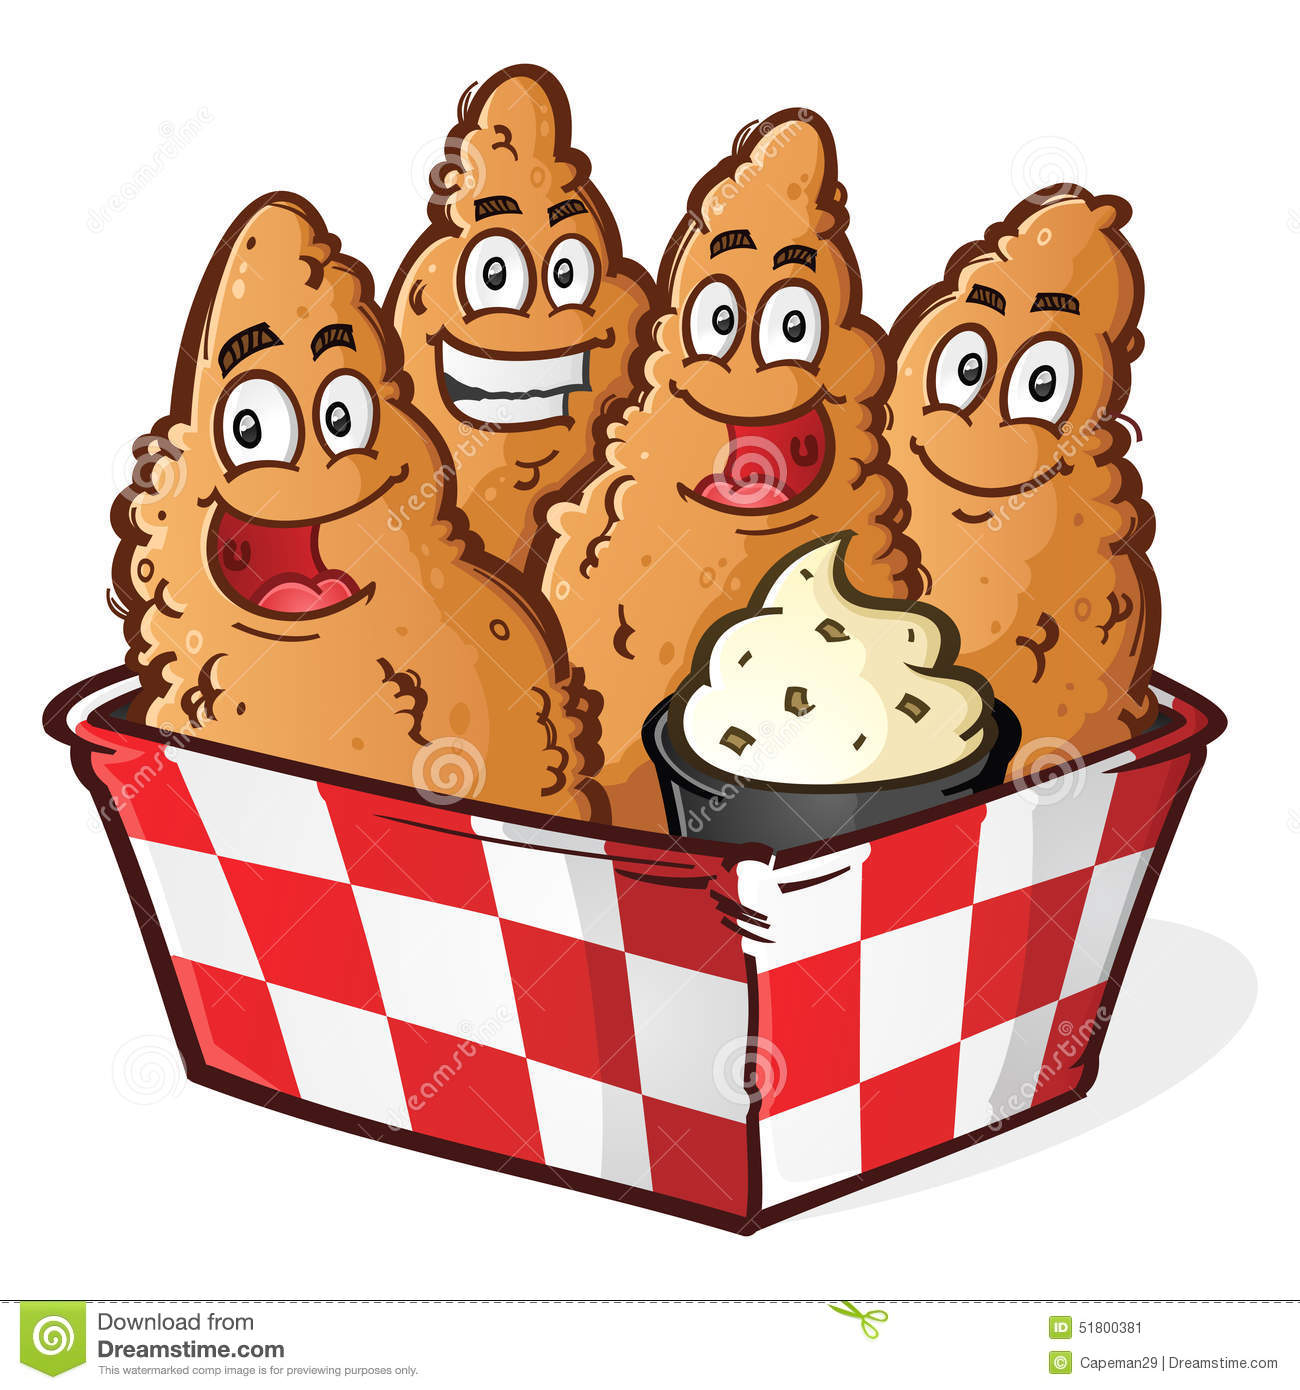 Crispy Golden Chicken Tenders Cartoon Characters In A Checkered Basket    